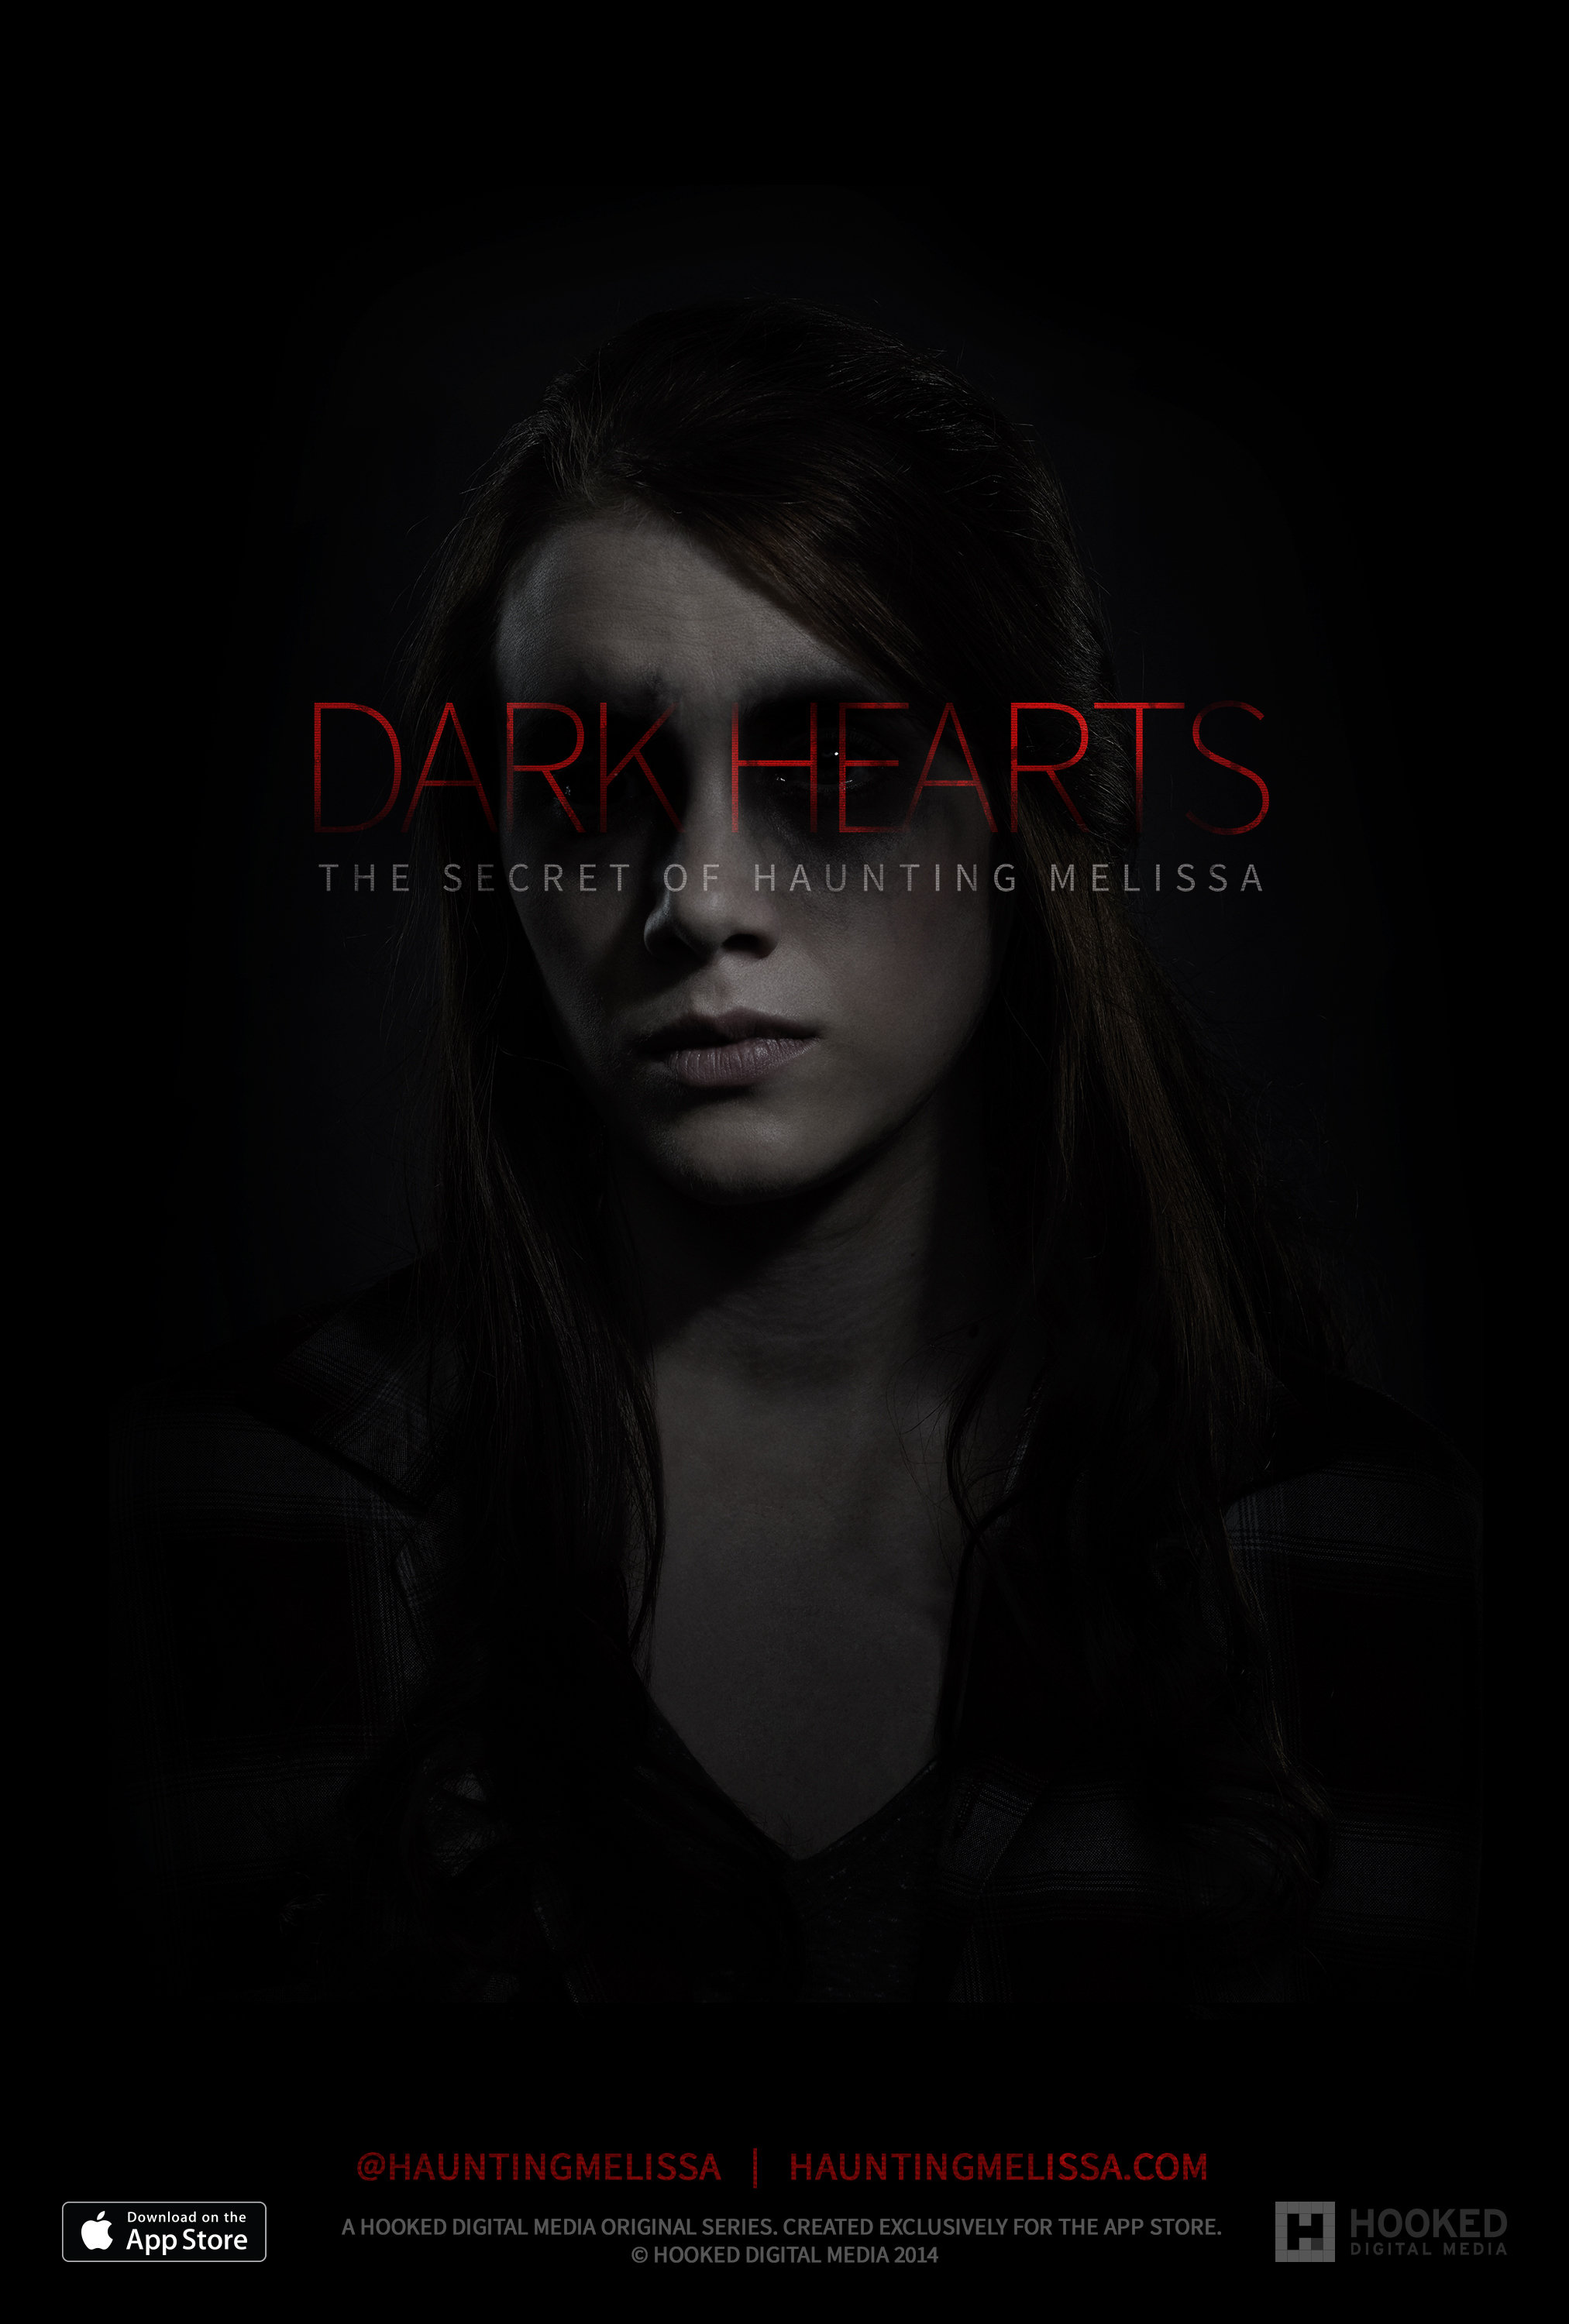 Dark Hearts: The Secret Of Haunting Melissa is the sequel to Haunting Melissa. Only as an app, only in the App Store. www.AppStore.com/DarkHearts